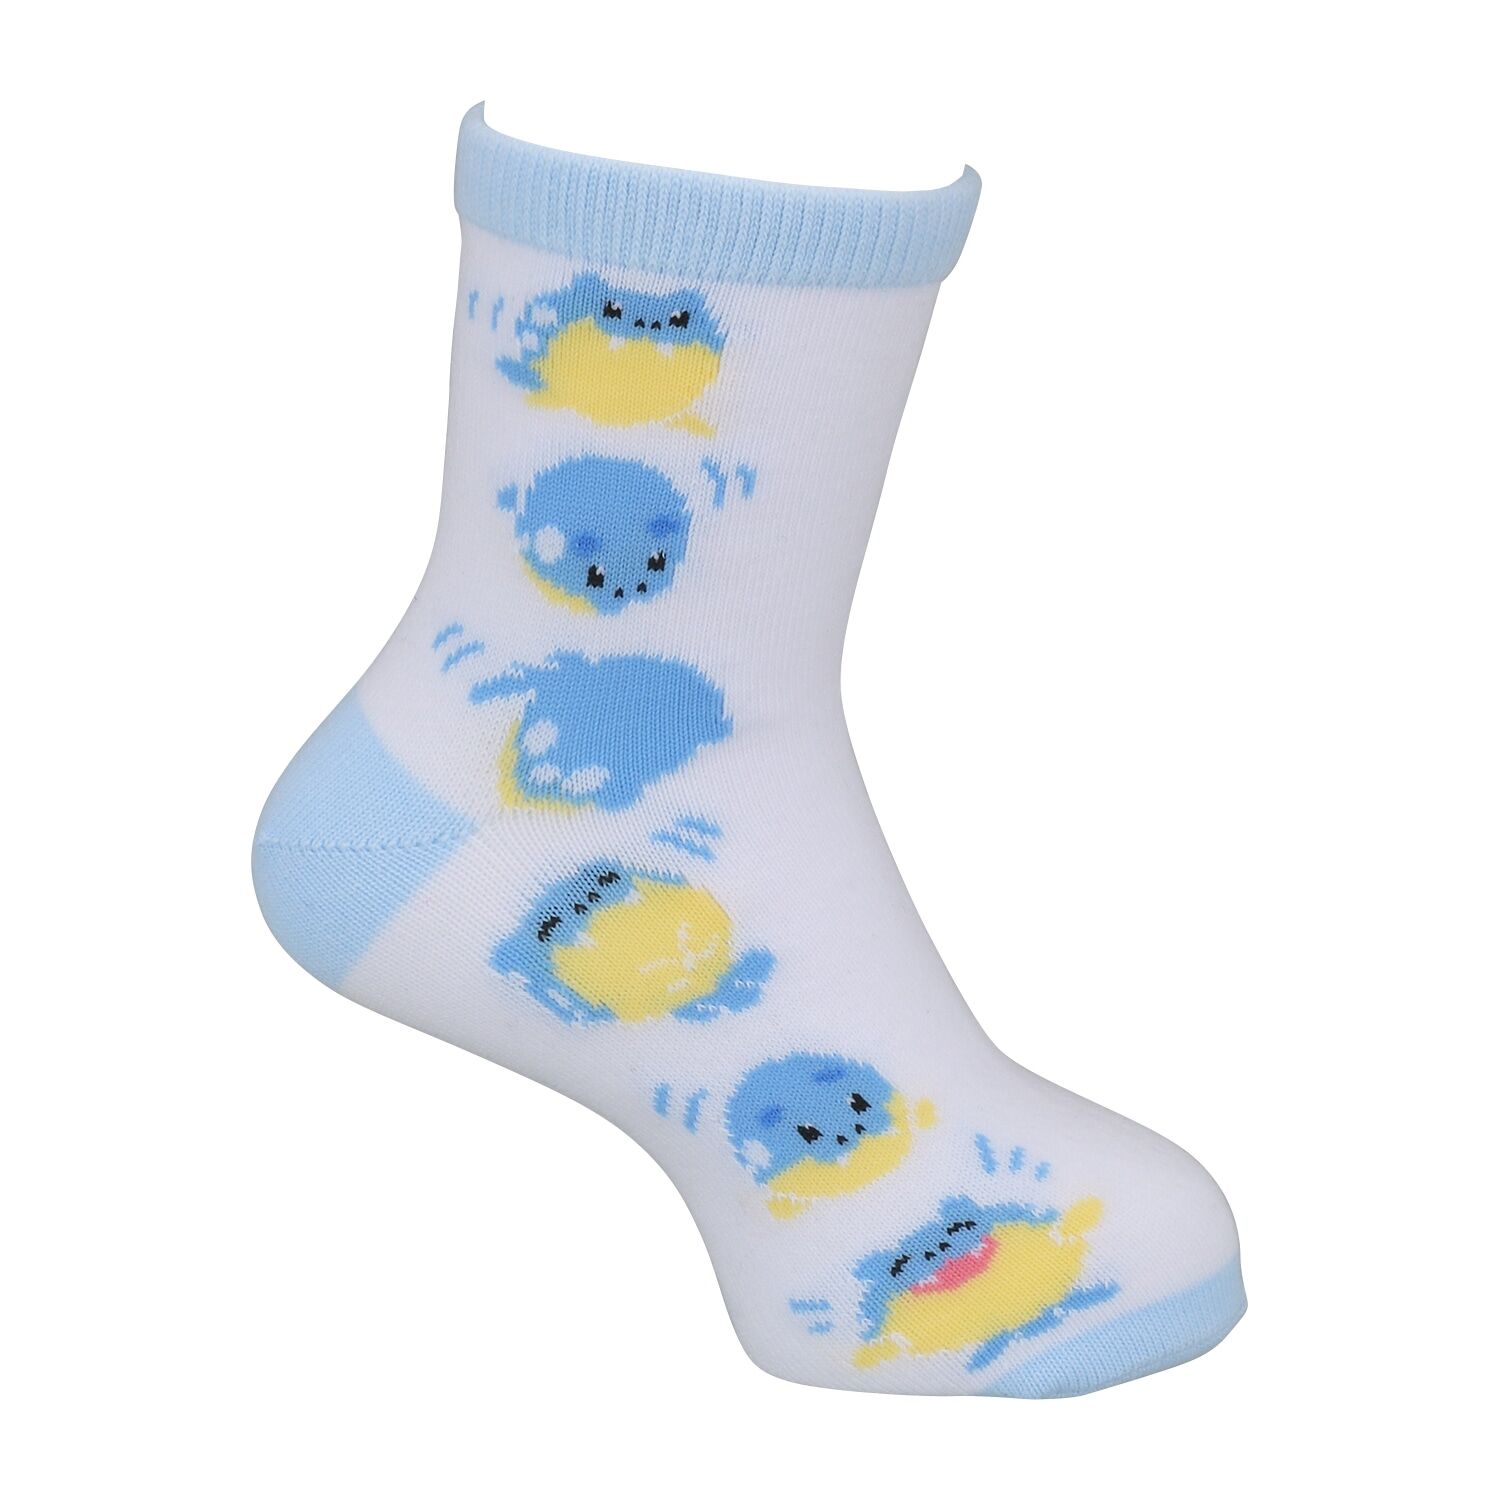 Middle Socks Spheal (23-25cm)